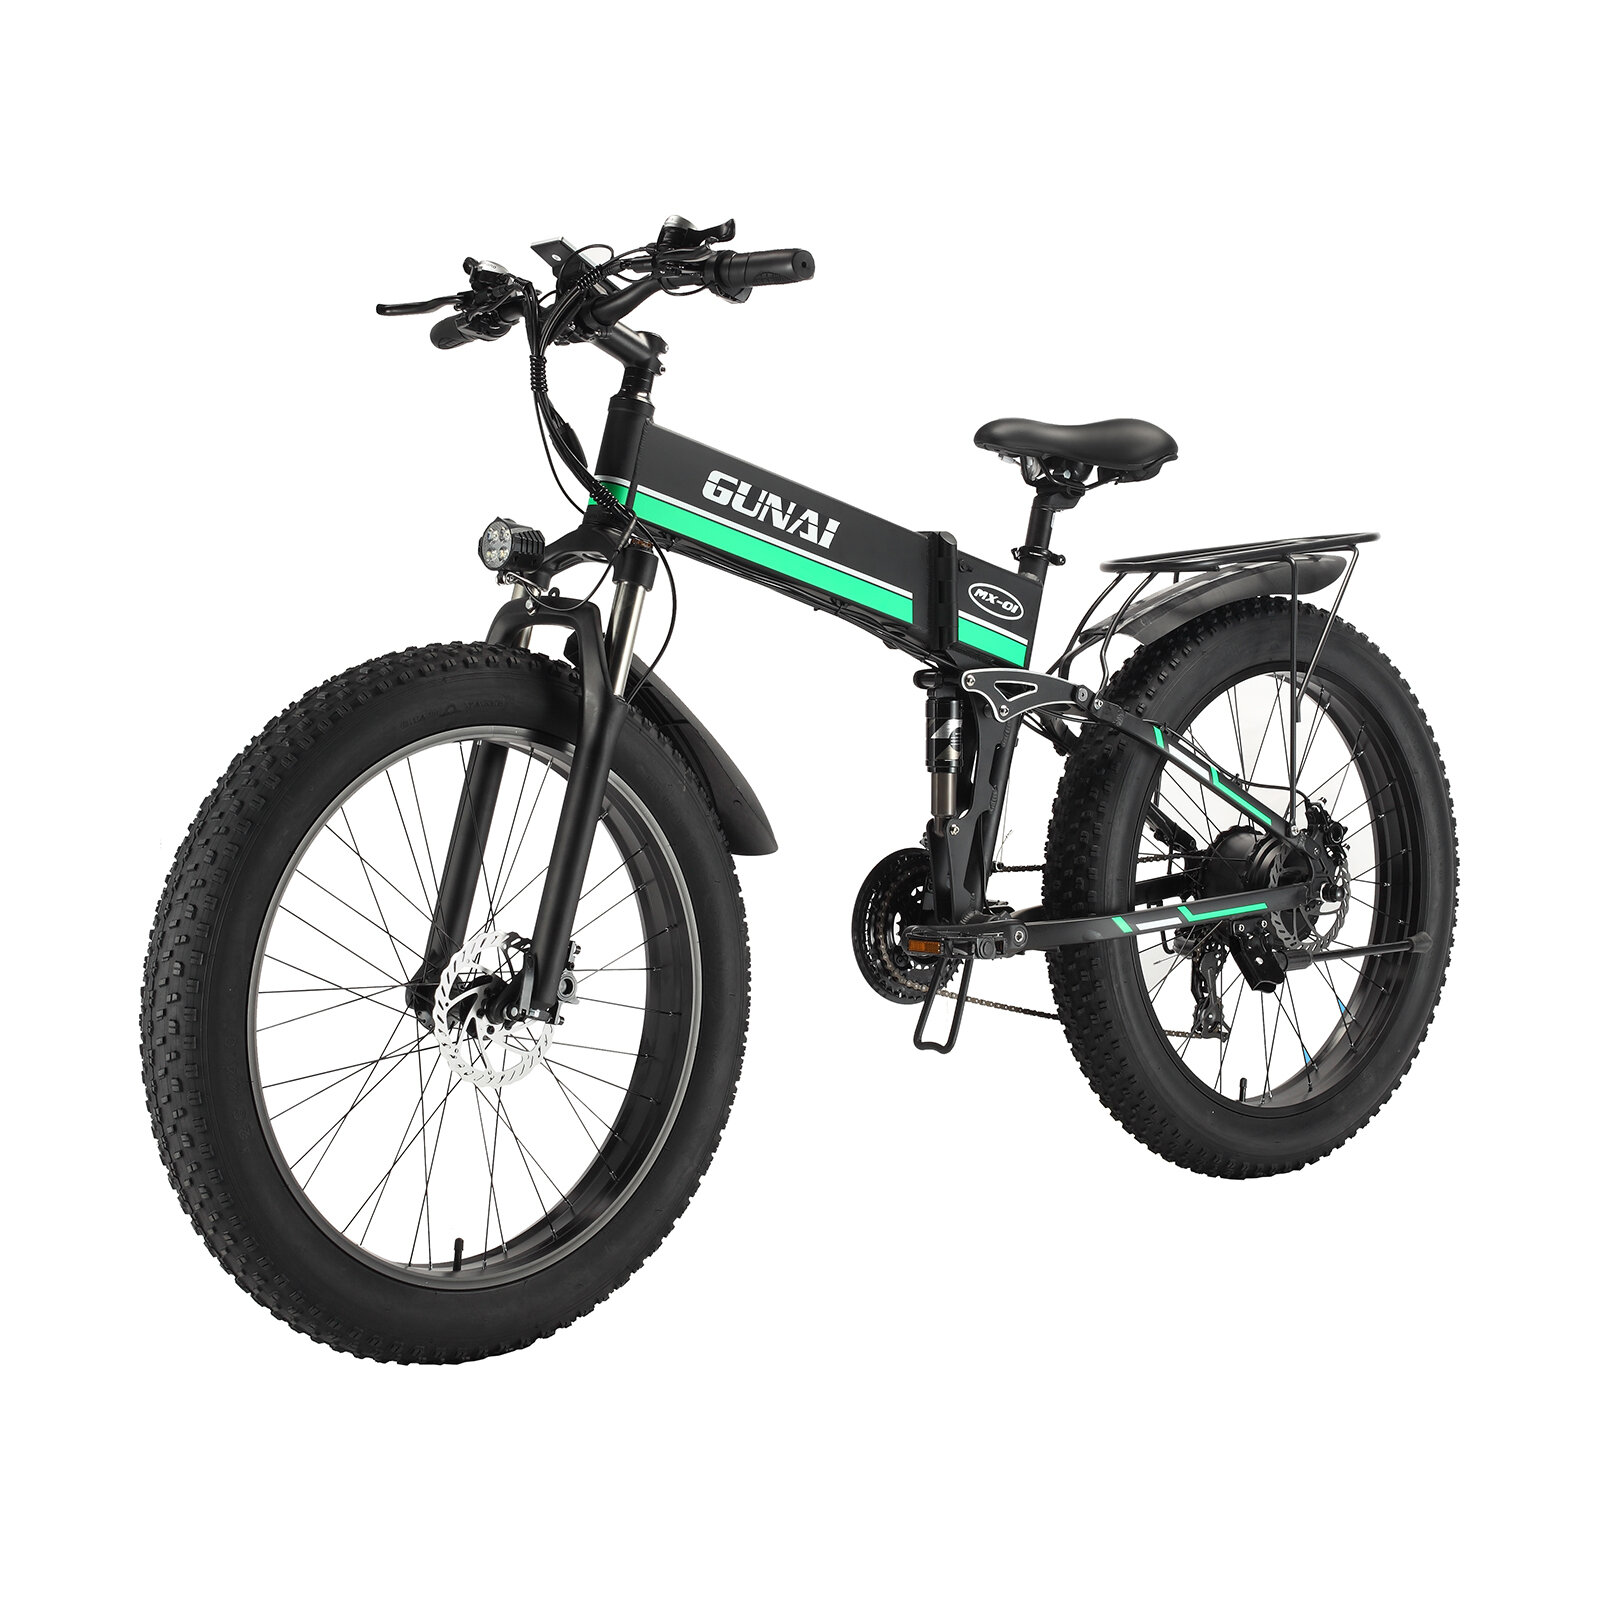 

[EU DIRECT] GUNAI MX01 1000W 48V 12.8Ah 26inch Electric Bicycle 40-50km Mileage Range 150kg Max Load 21 Speed Electric B